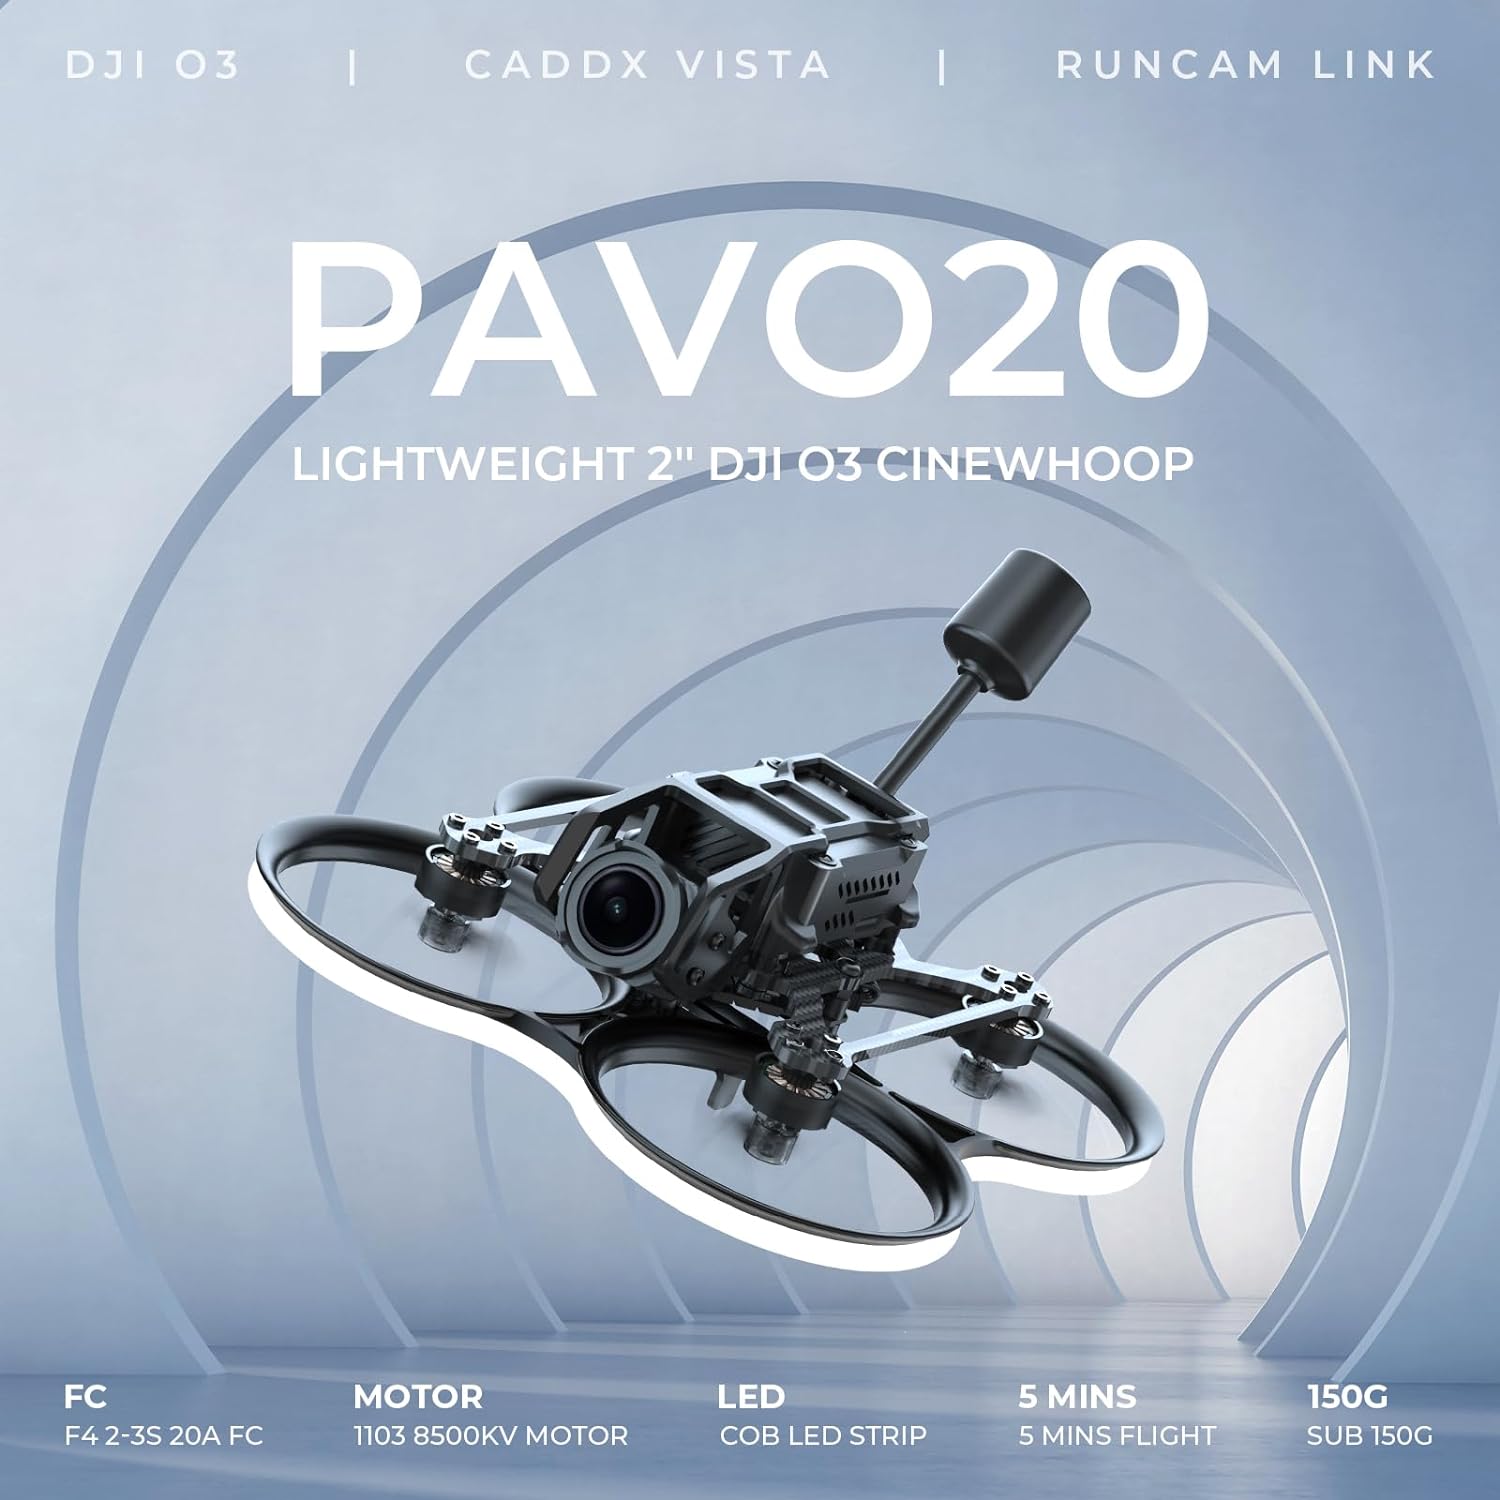 BETAFPV Pavo20 Drone Details